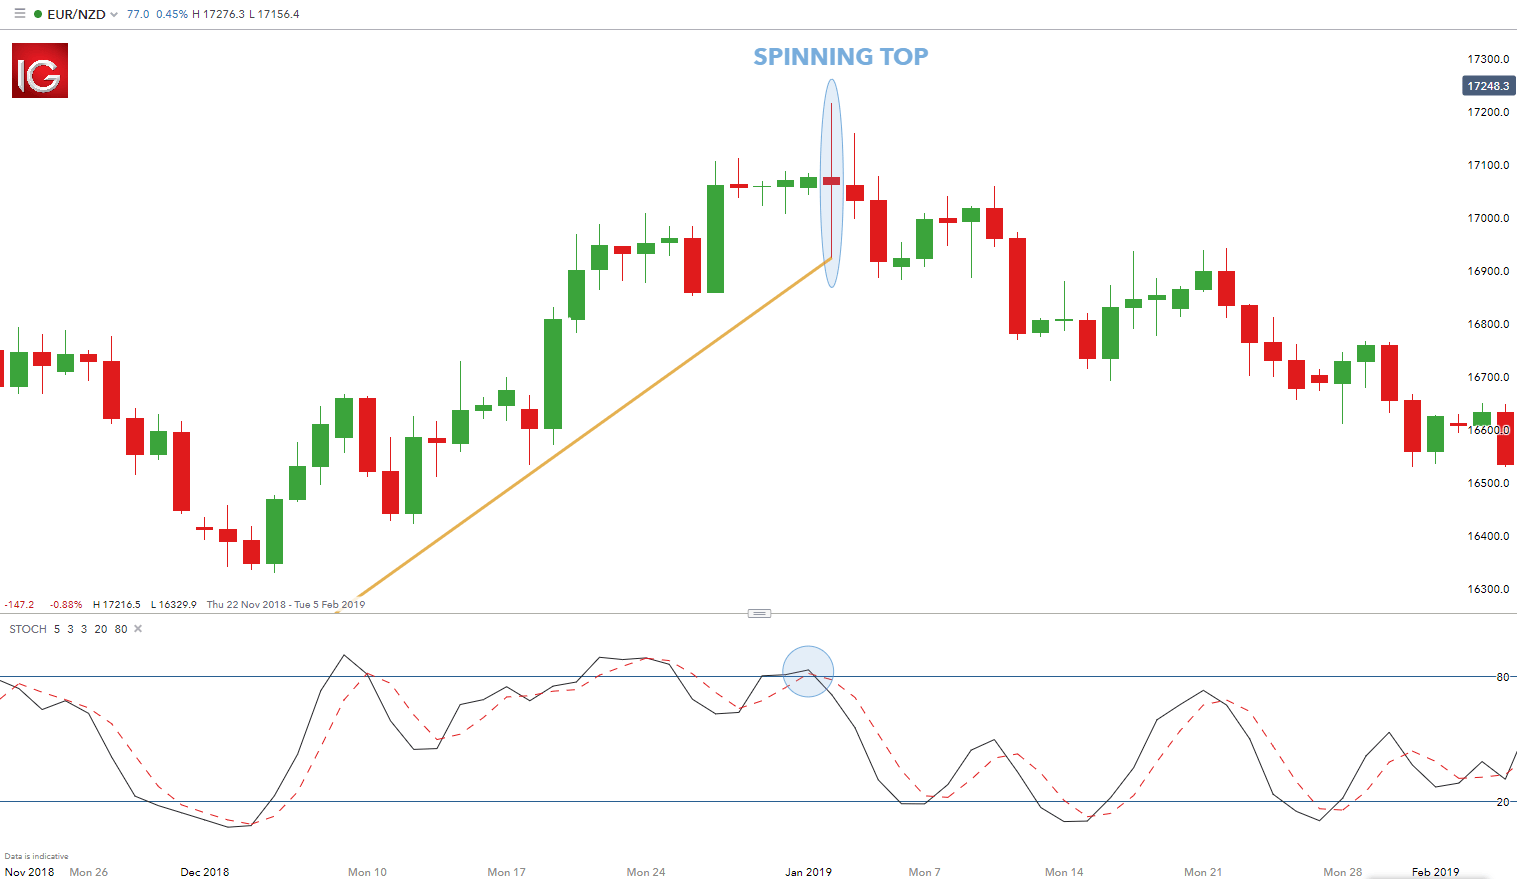 EUR/NZD spinning top candlestick